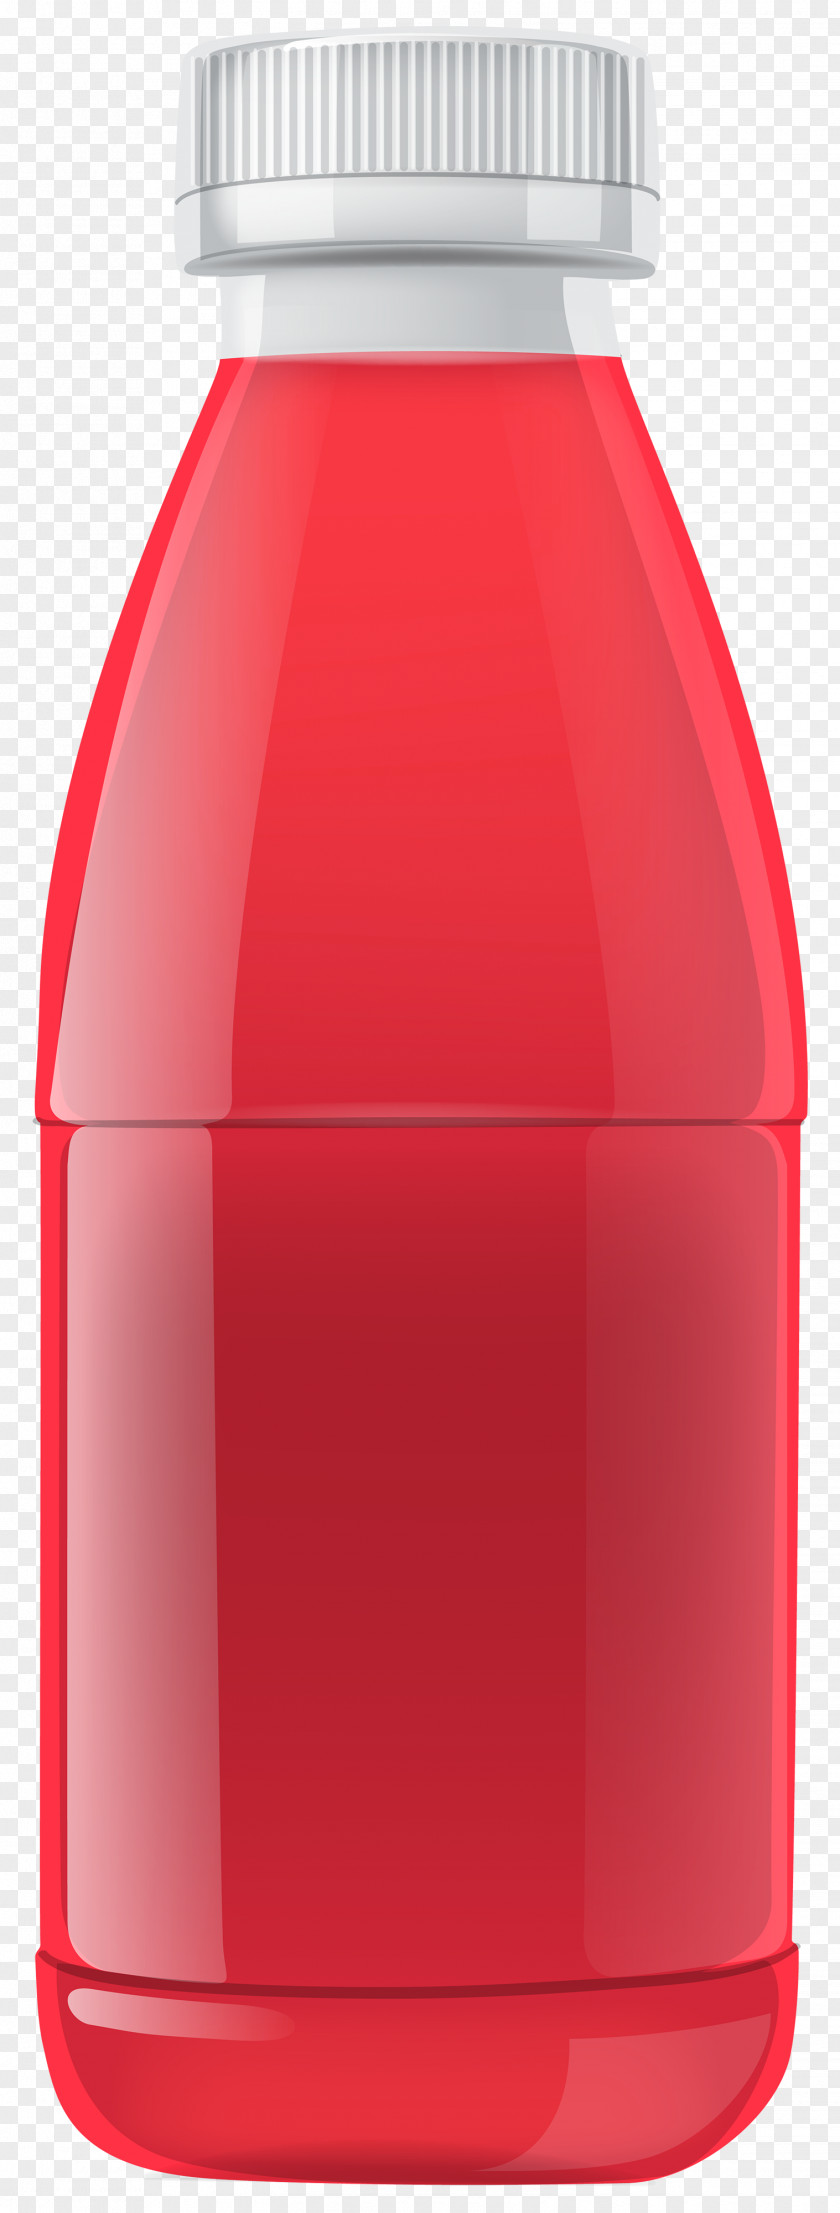 Fruit Juices Juice Water Bottles Clip Art PNG